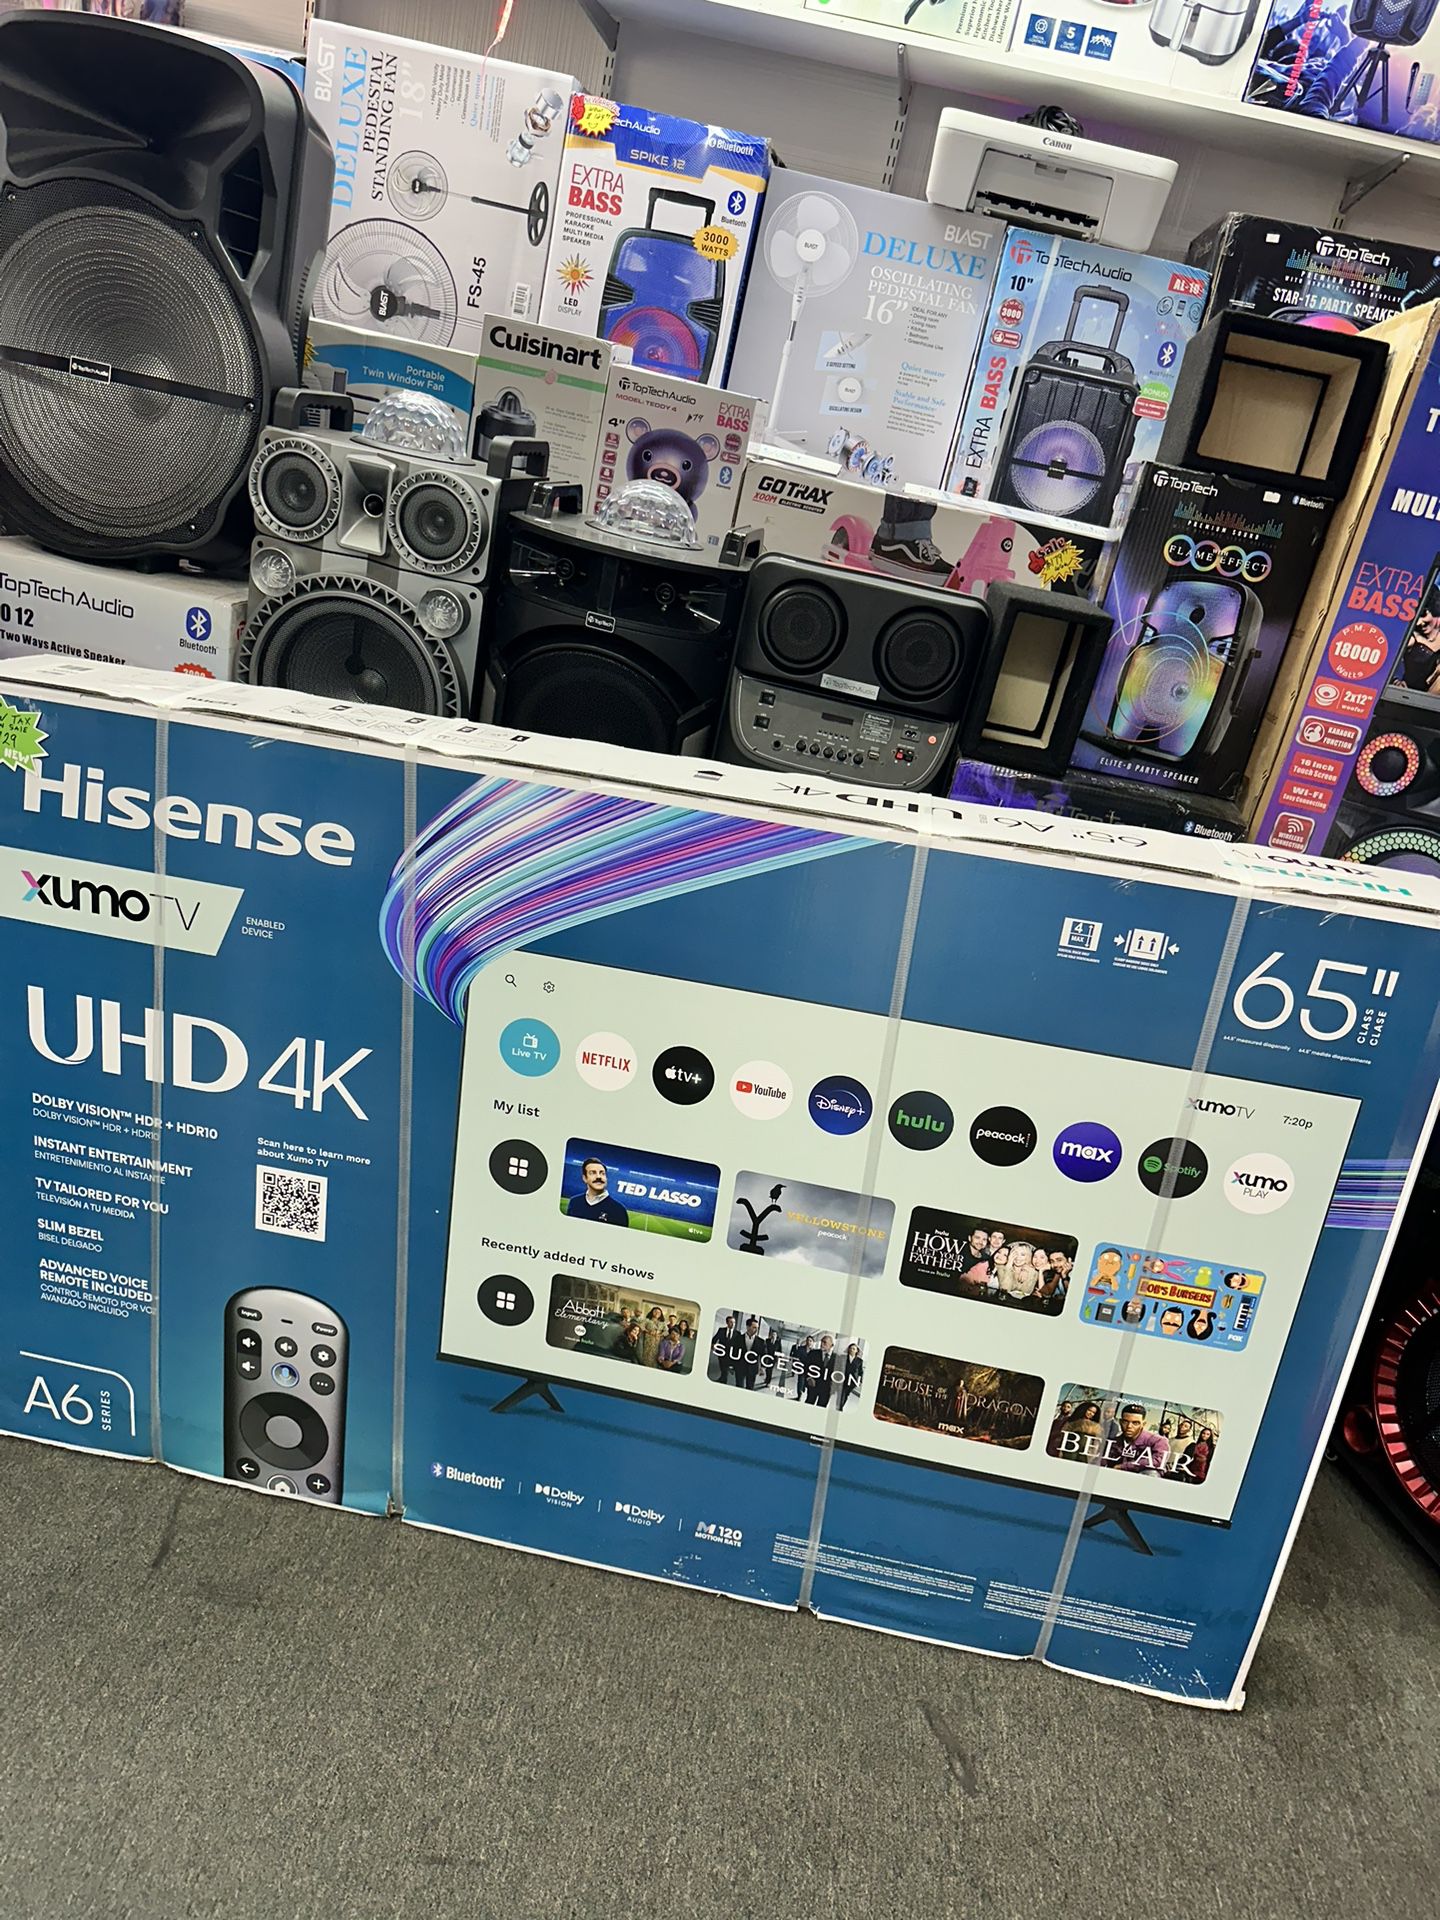 Smart Tv Hisense 65” New $379